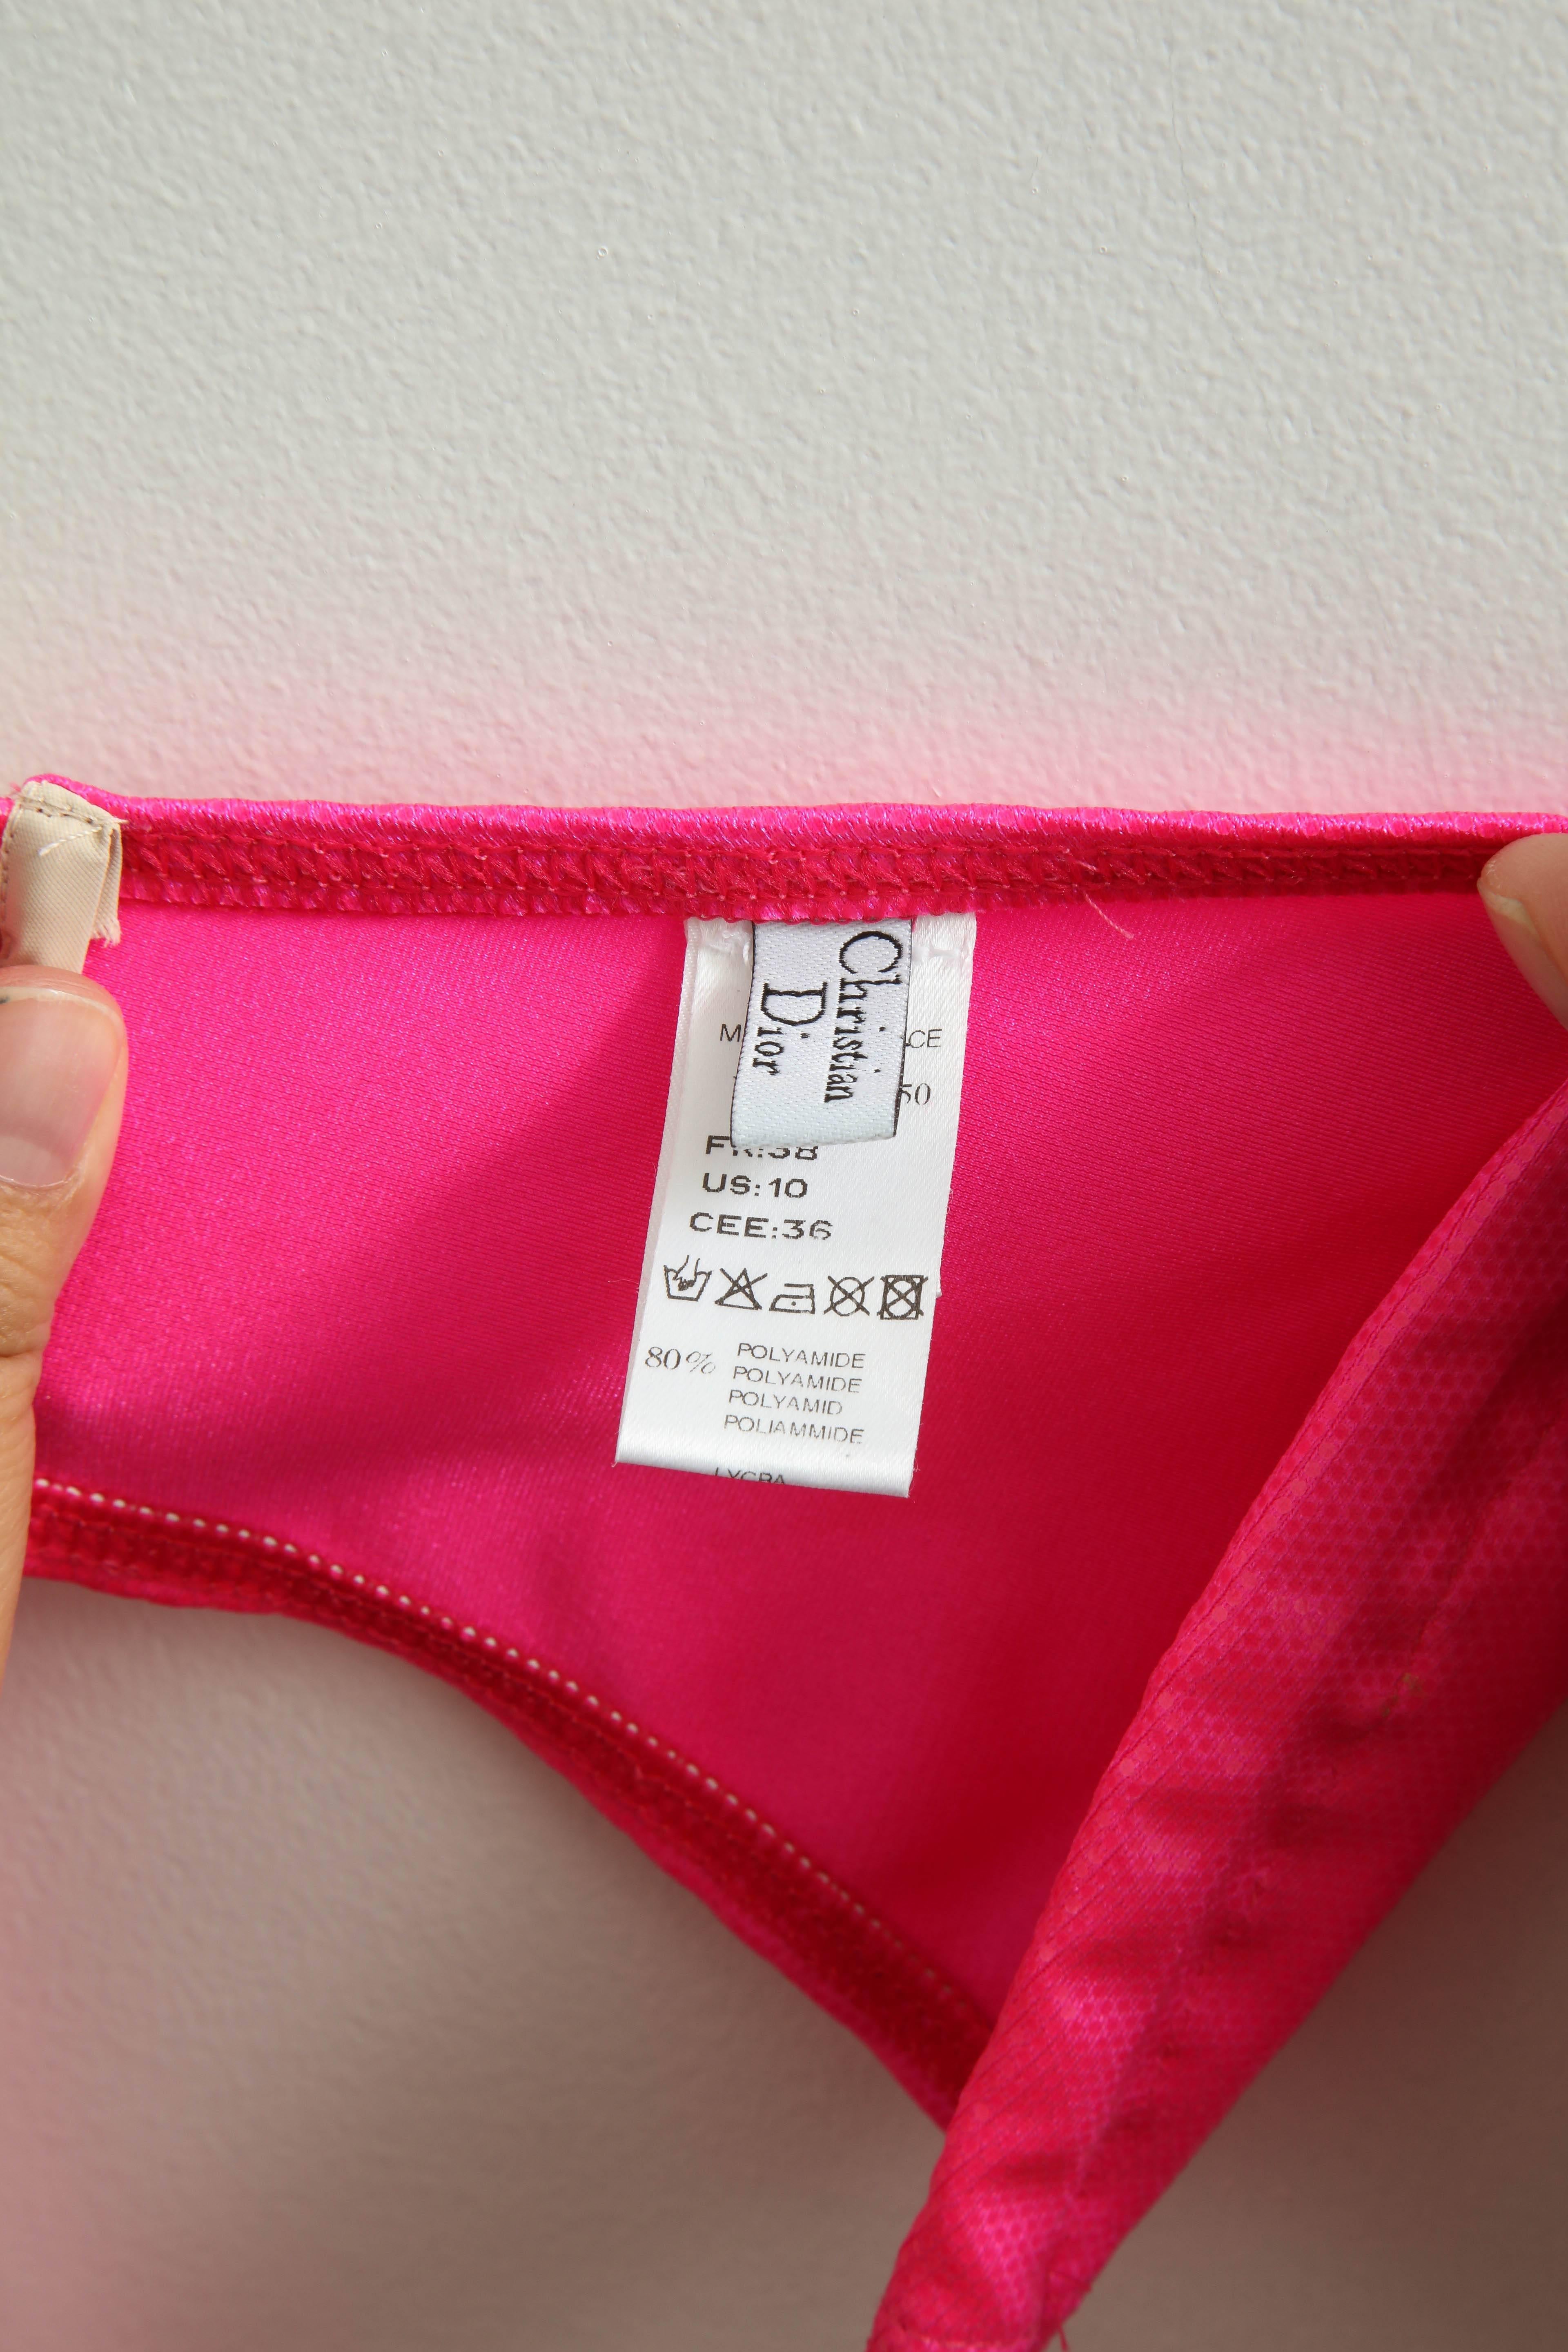 John Galliano for Christian Dior Pink Bikini For Sale 3